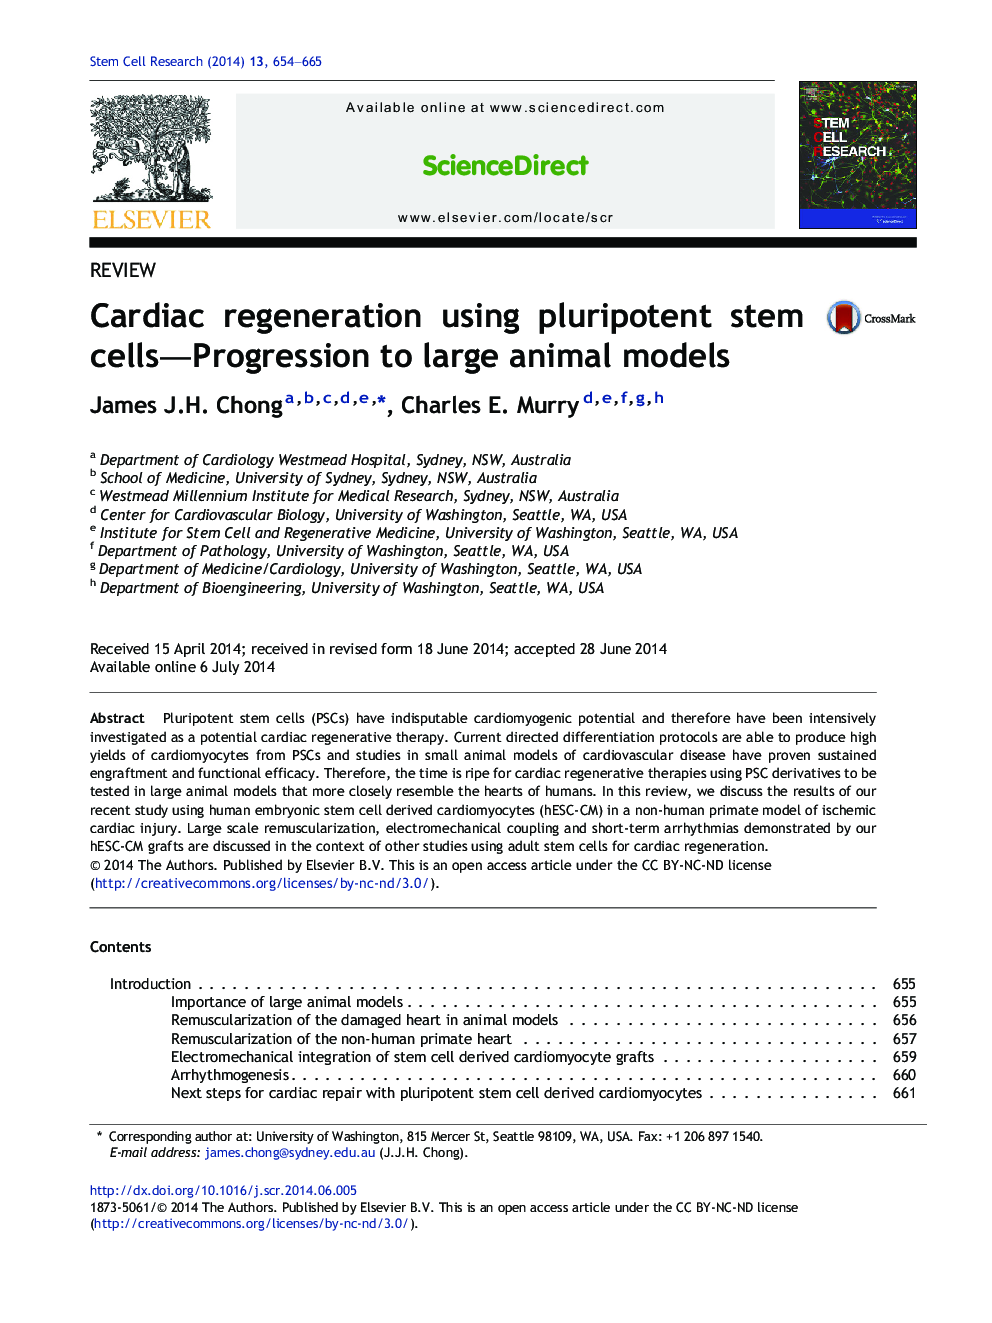 Cardiac regeneration using pluripotent stem cells—Progression to large animal models